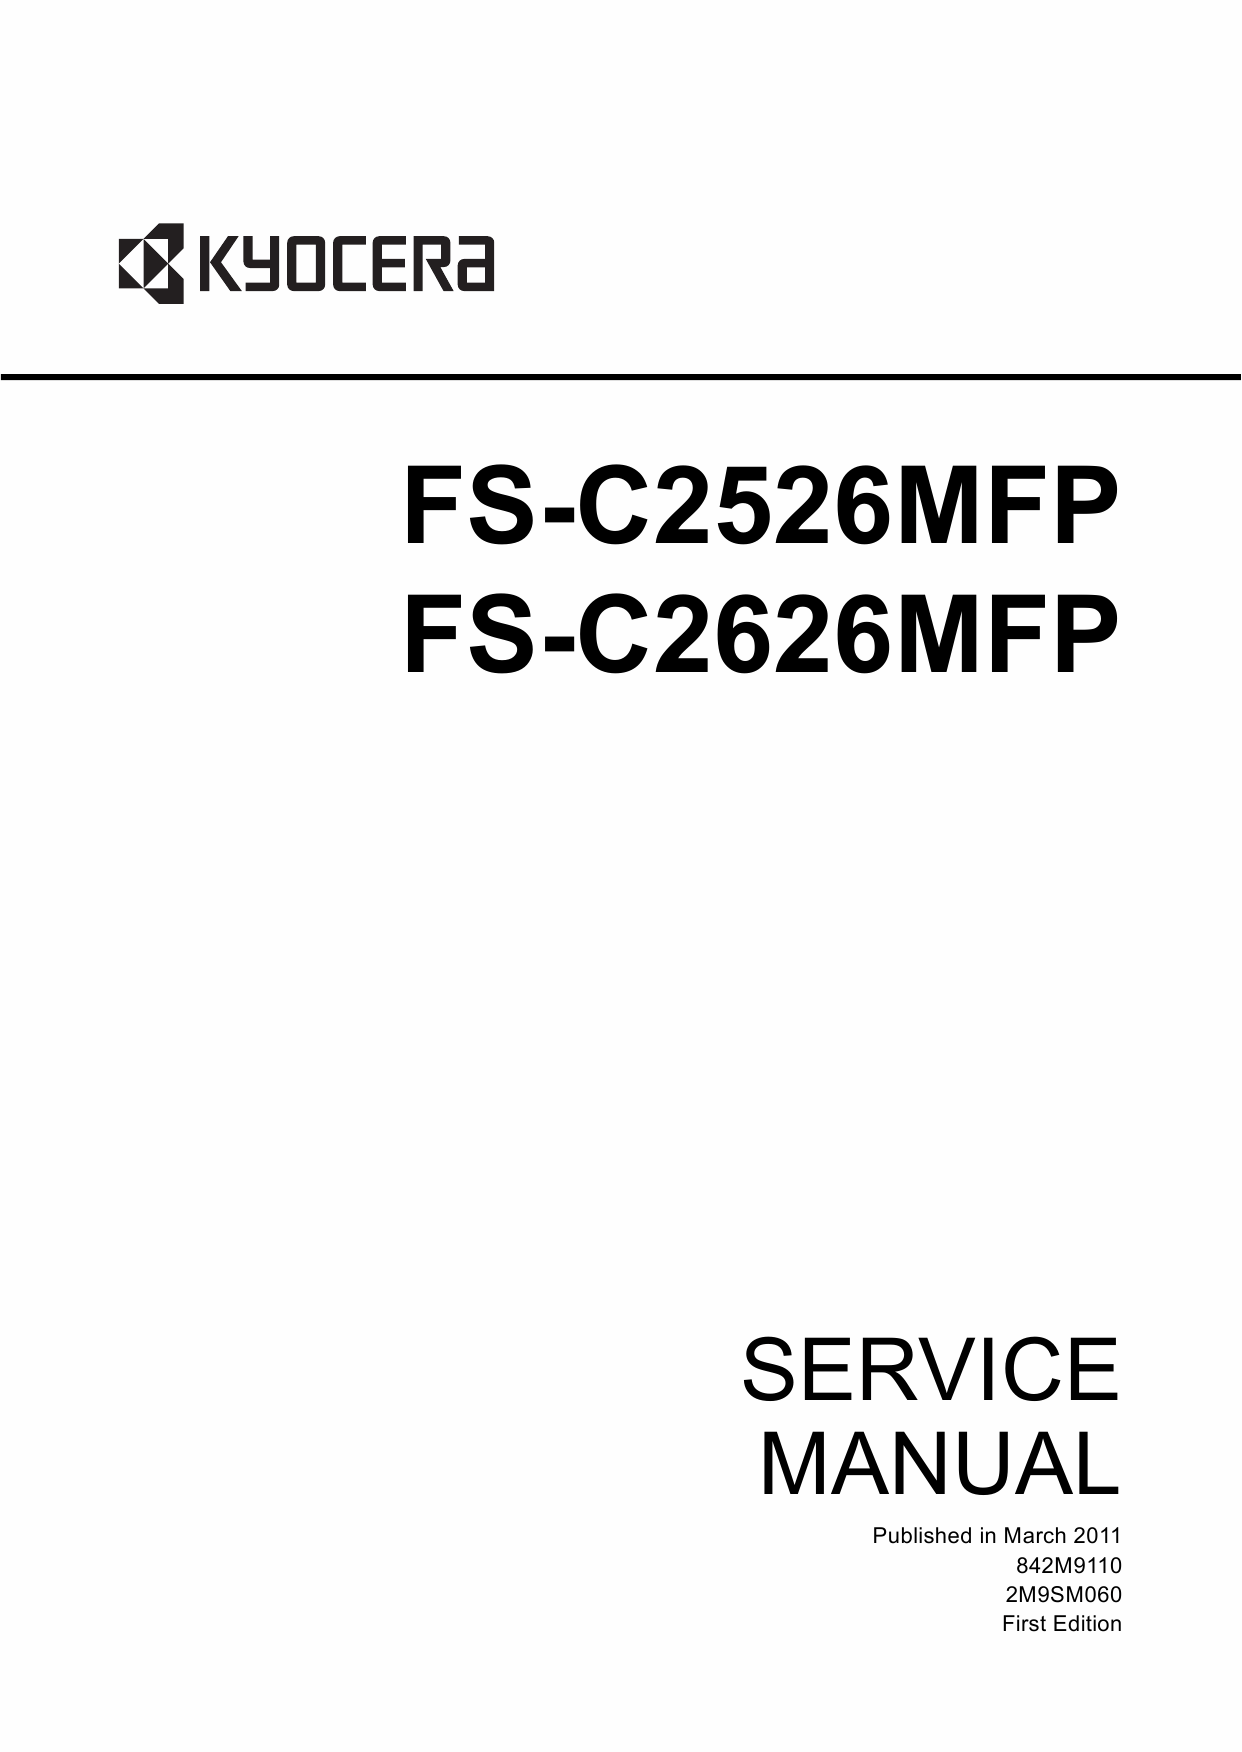 KYOCERA ColorMFP FS-C2526MFP C2626MFP Service Manual-1